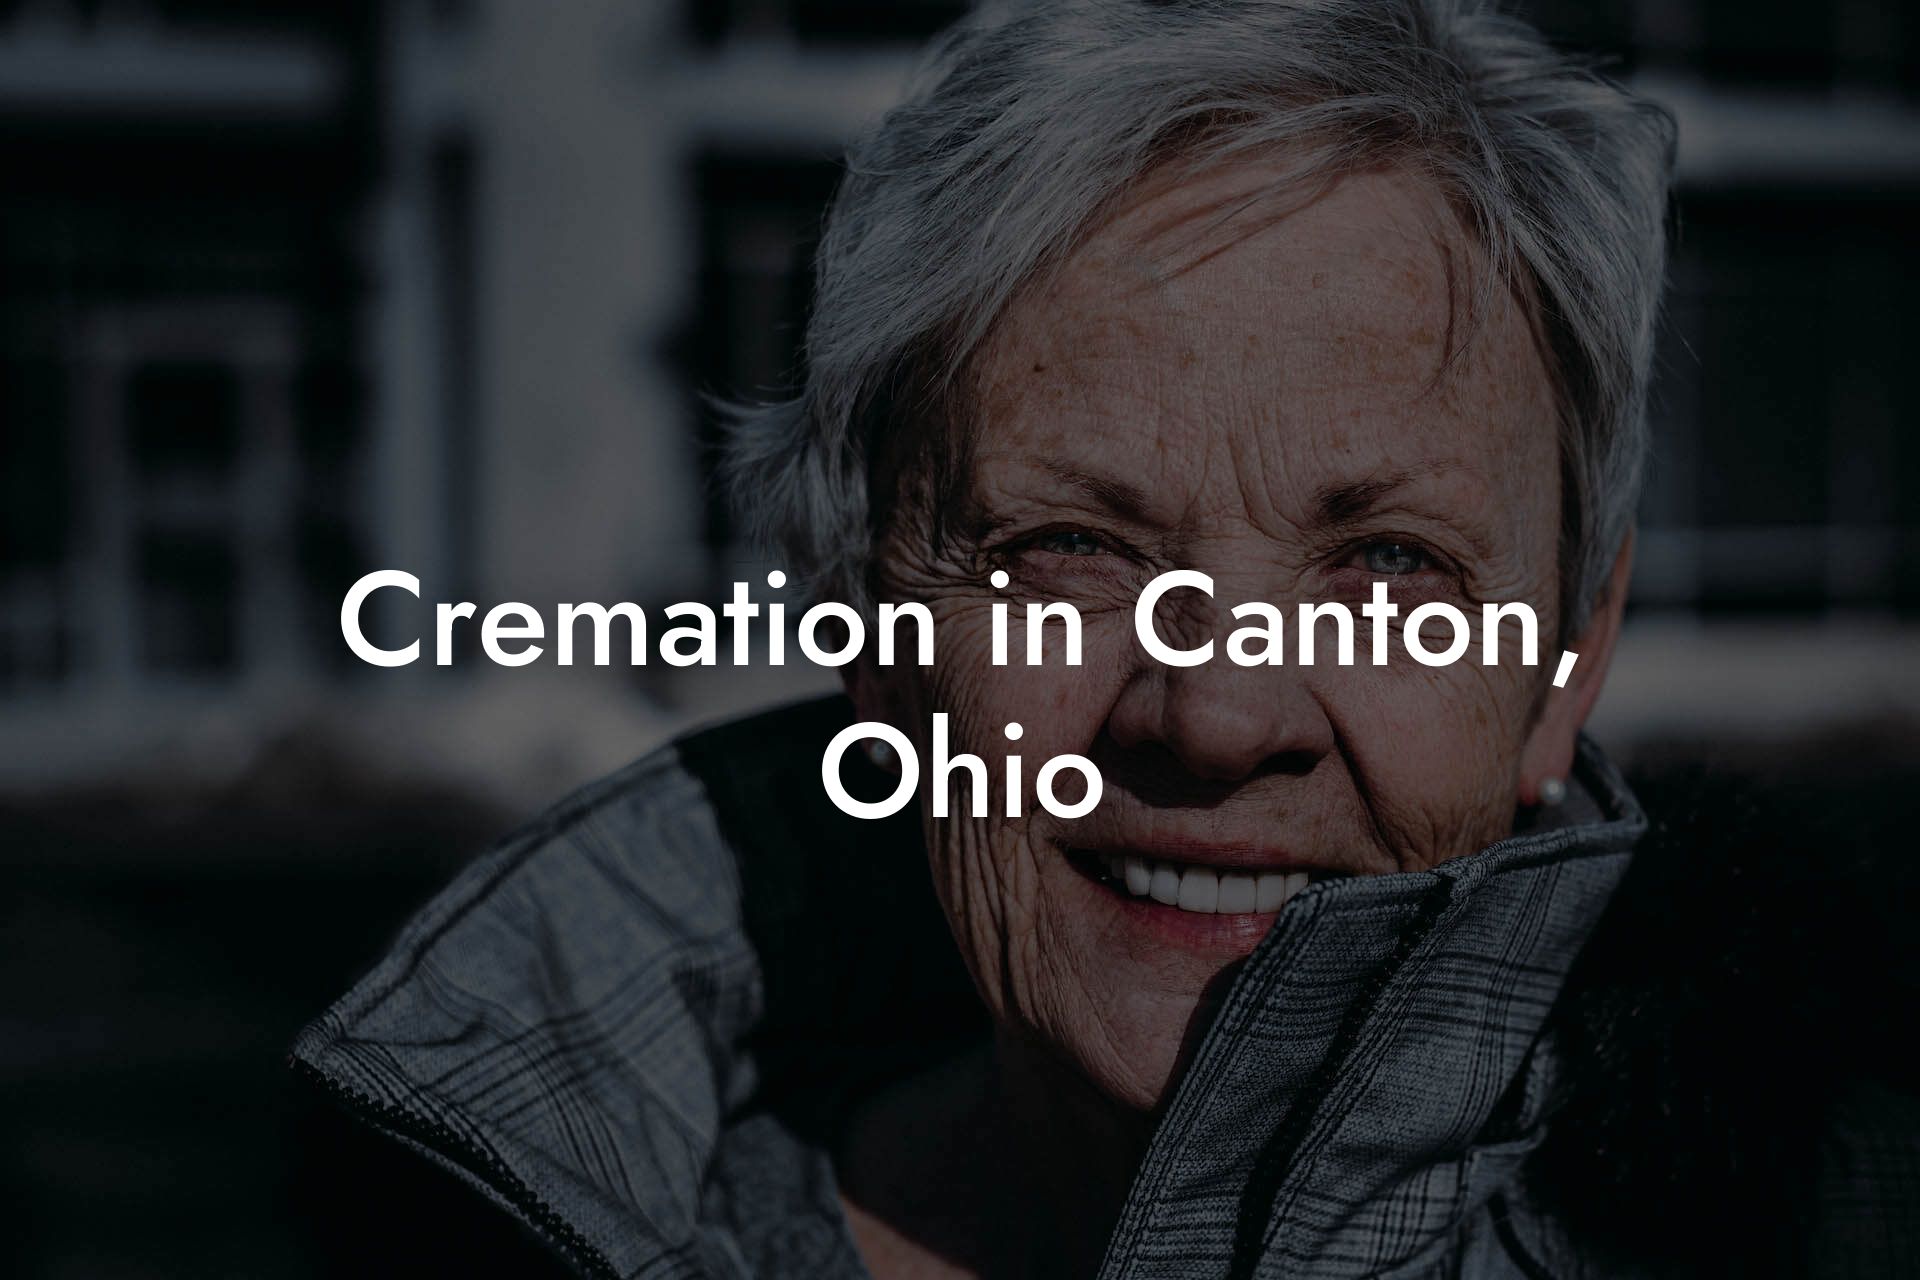 Cremation in Canton, Ohio